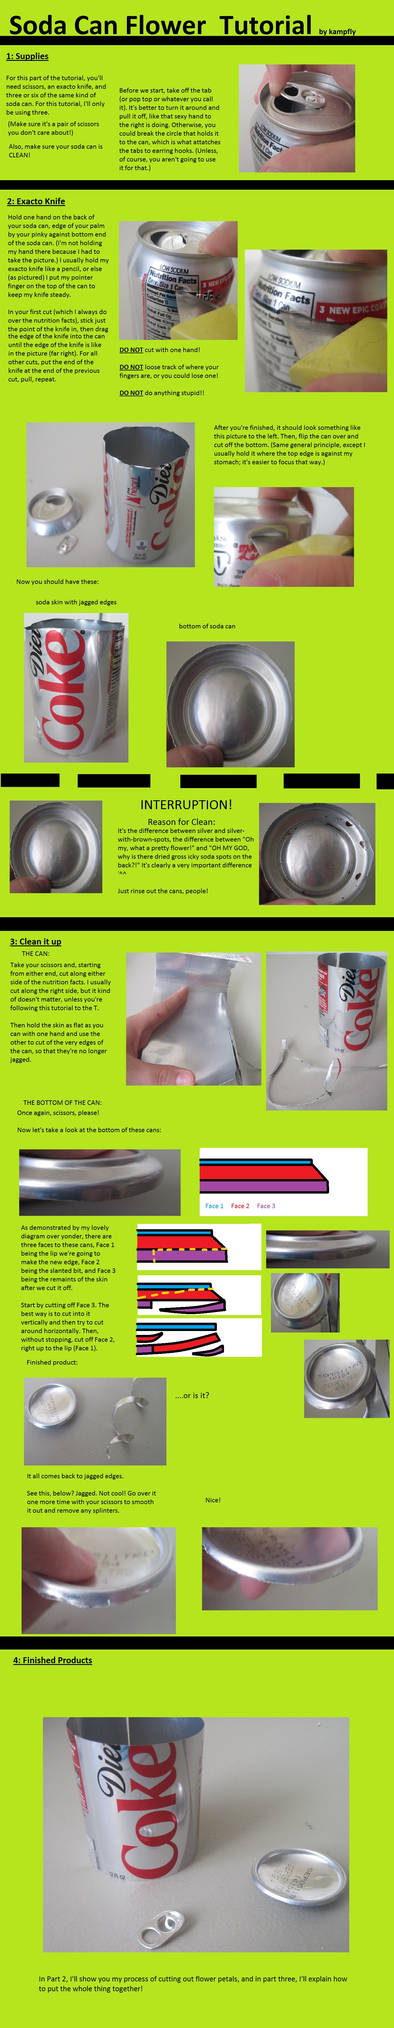 Soda Flower tutorial pt 1 by kampfly